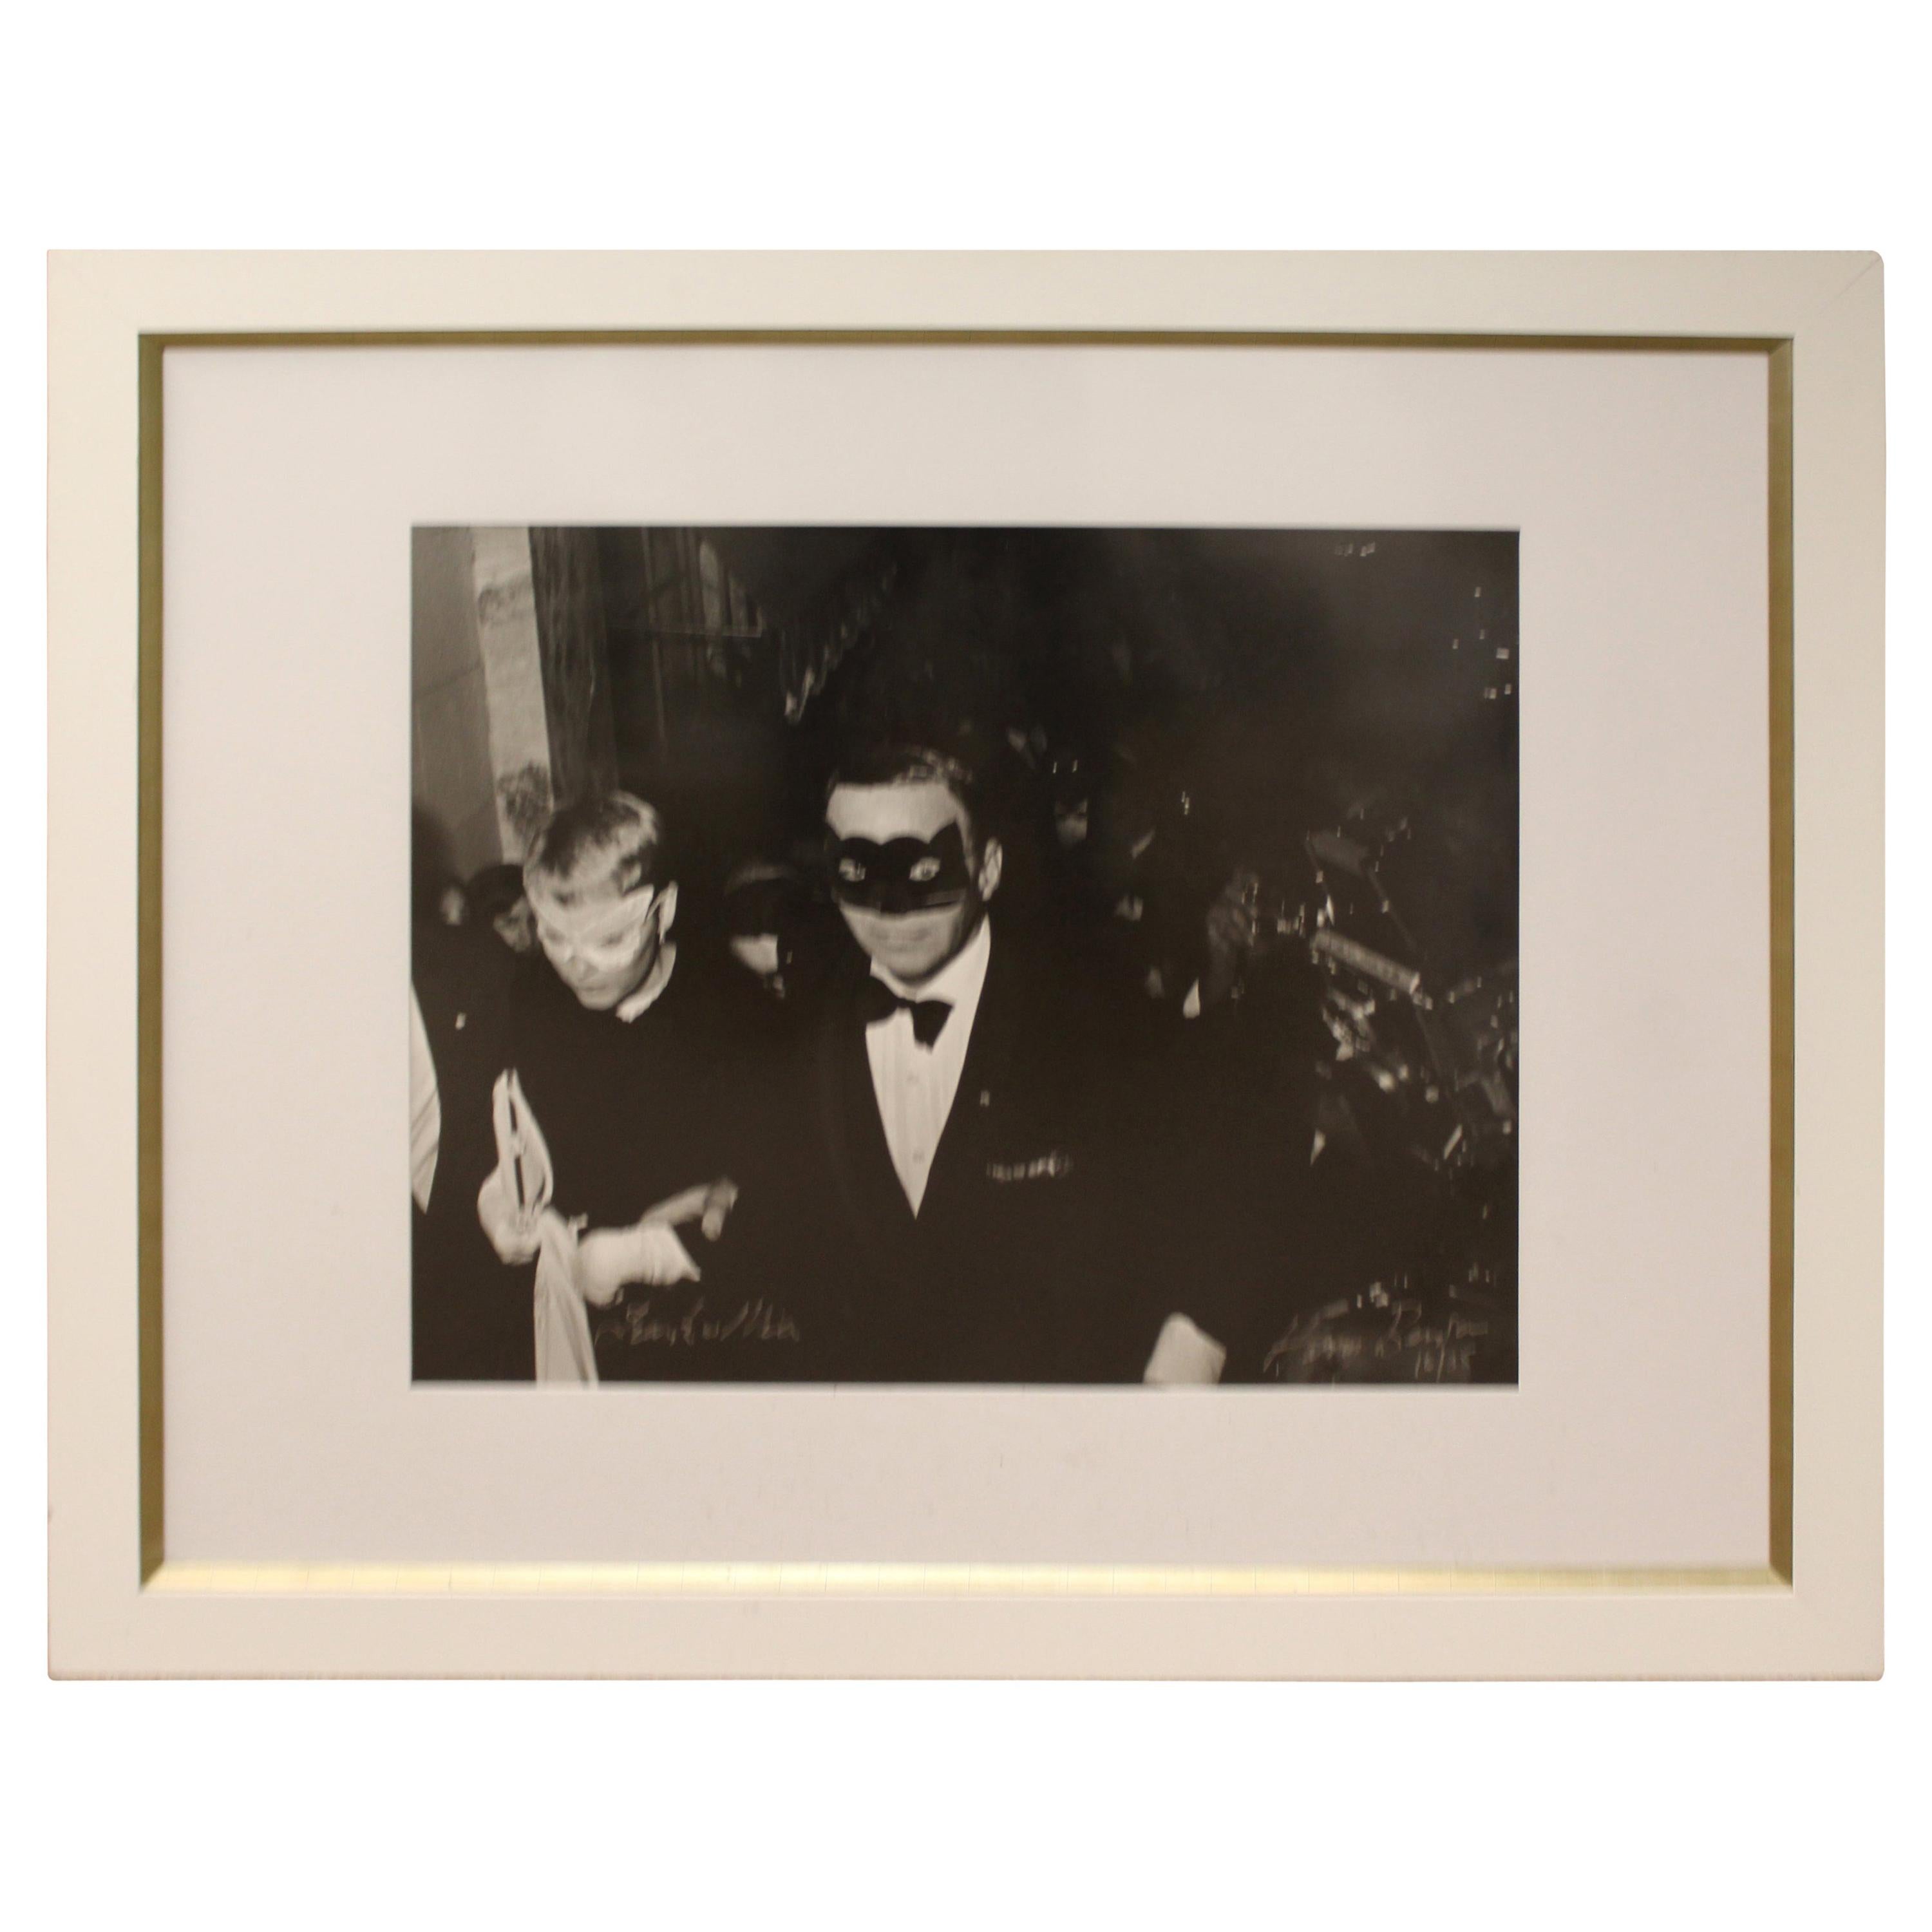 Mid-Century Modern Framed Photograph Frank & Mia Signed by Harry Benson, 1966